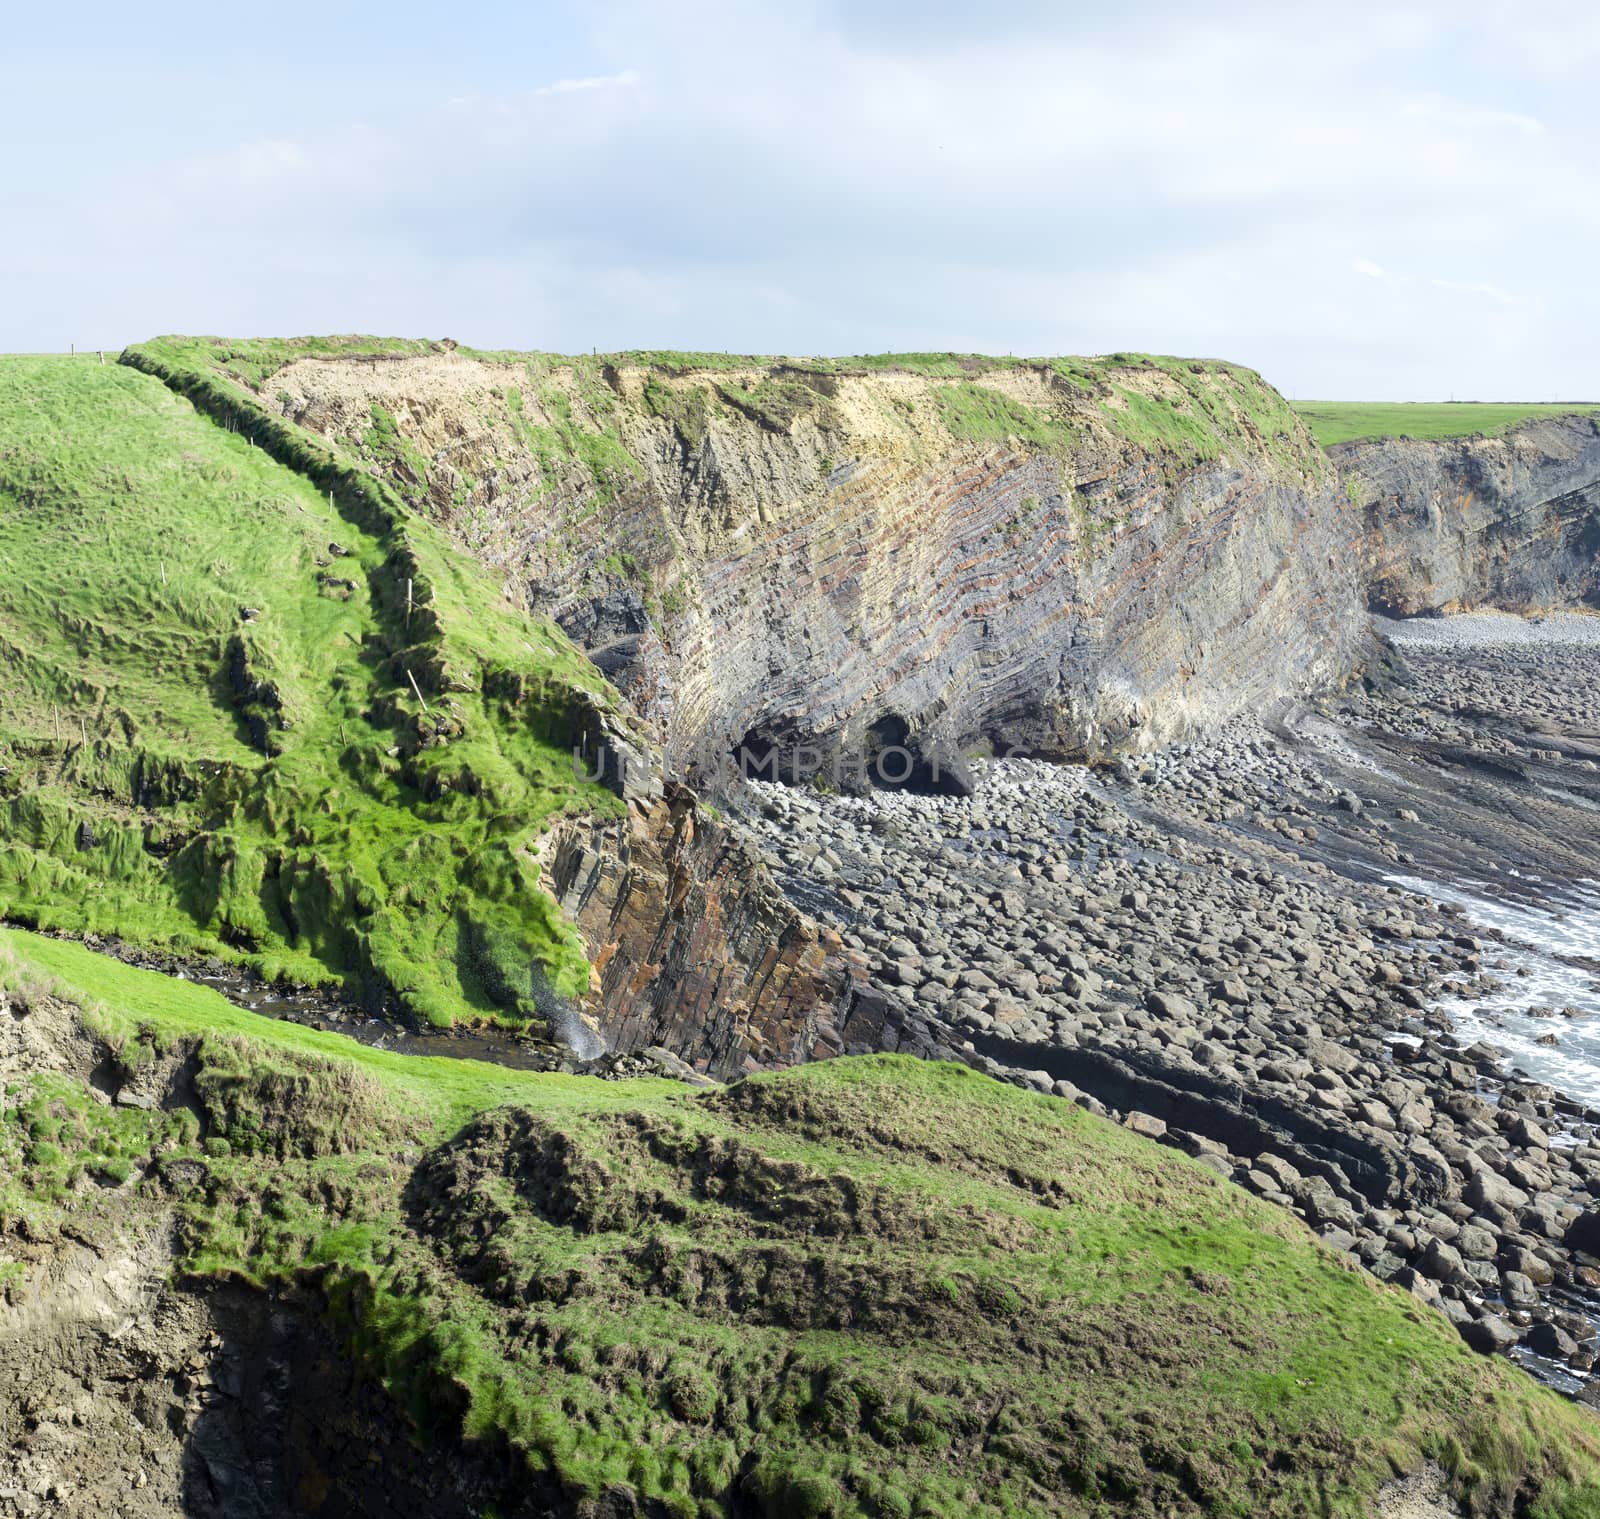 rocky coastline and cliffs in county kerry ireland on the wild atlantic way